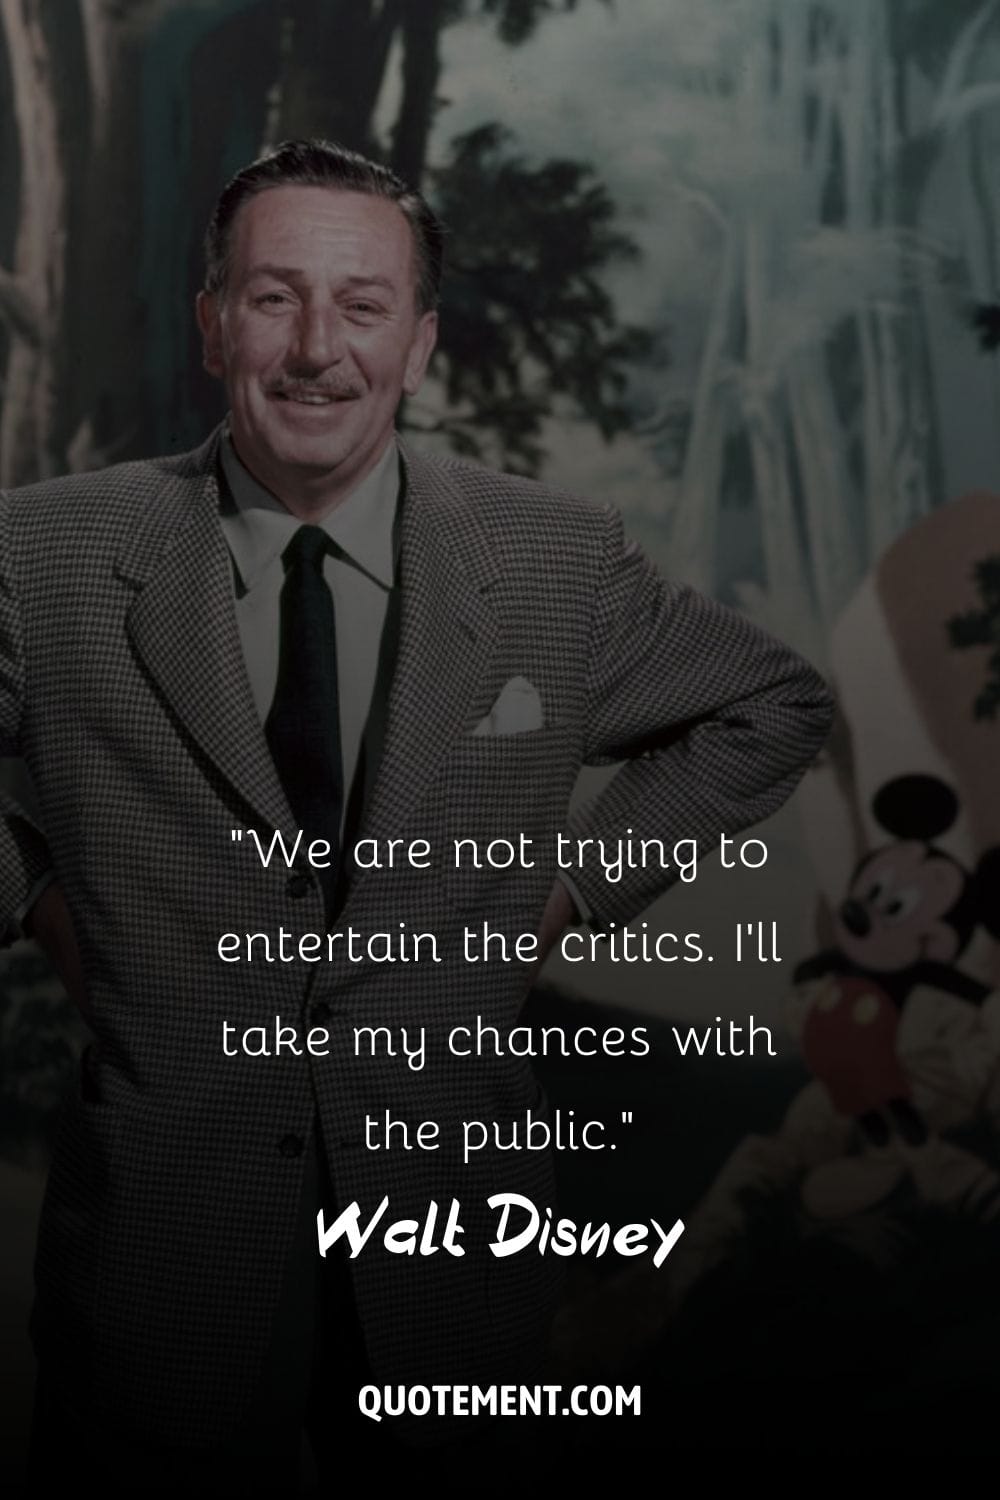 Endearing smile Walt Disney's influence frozen in time.